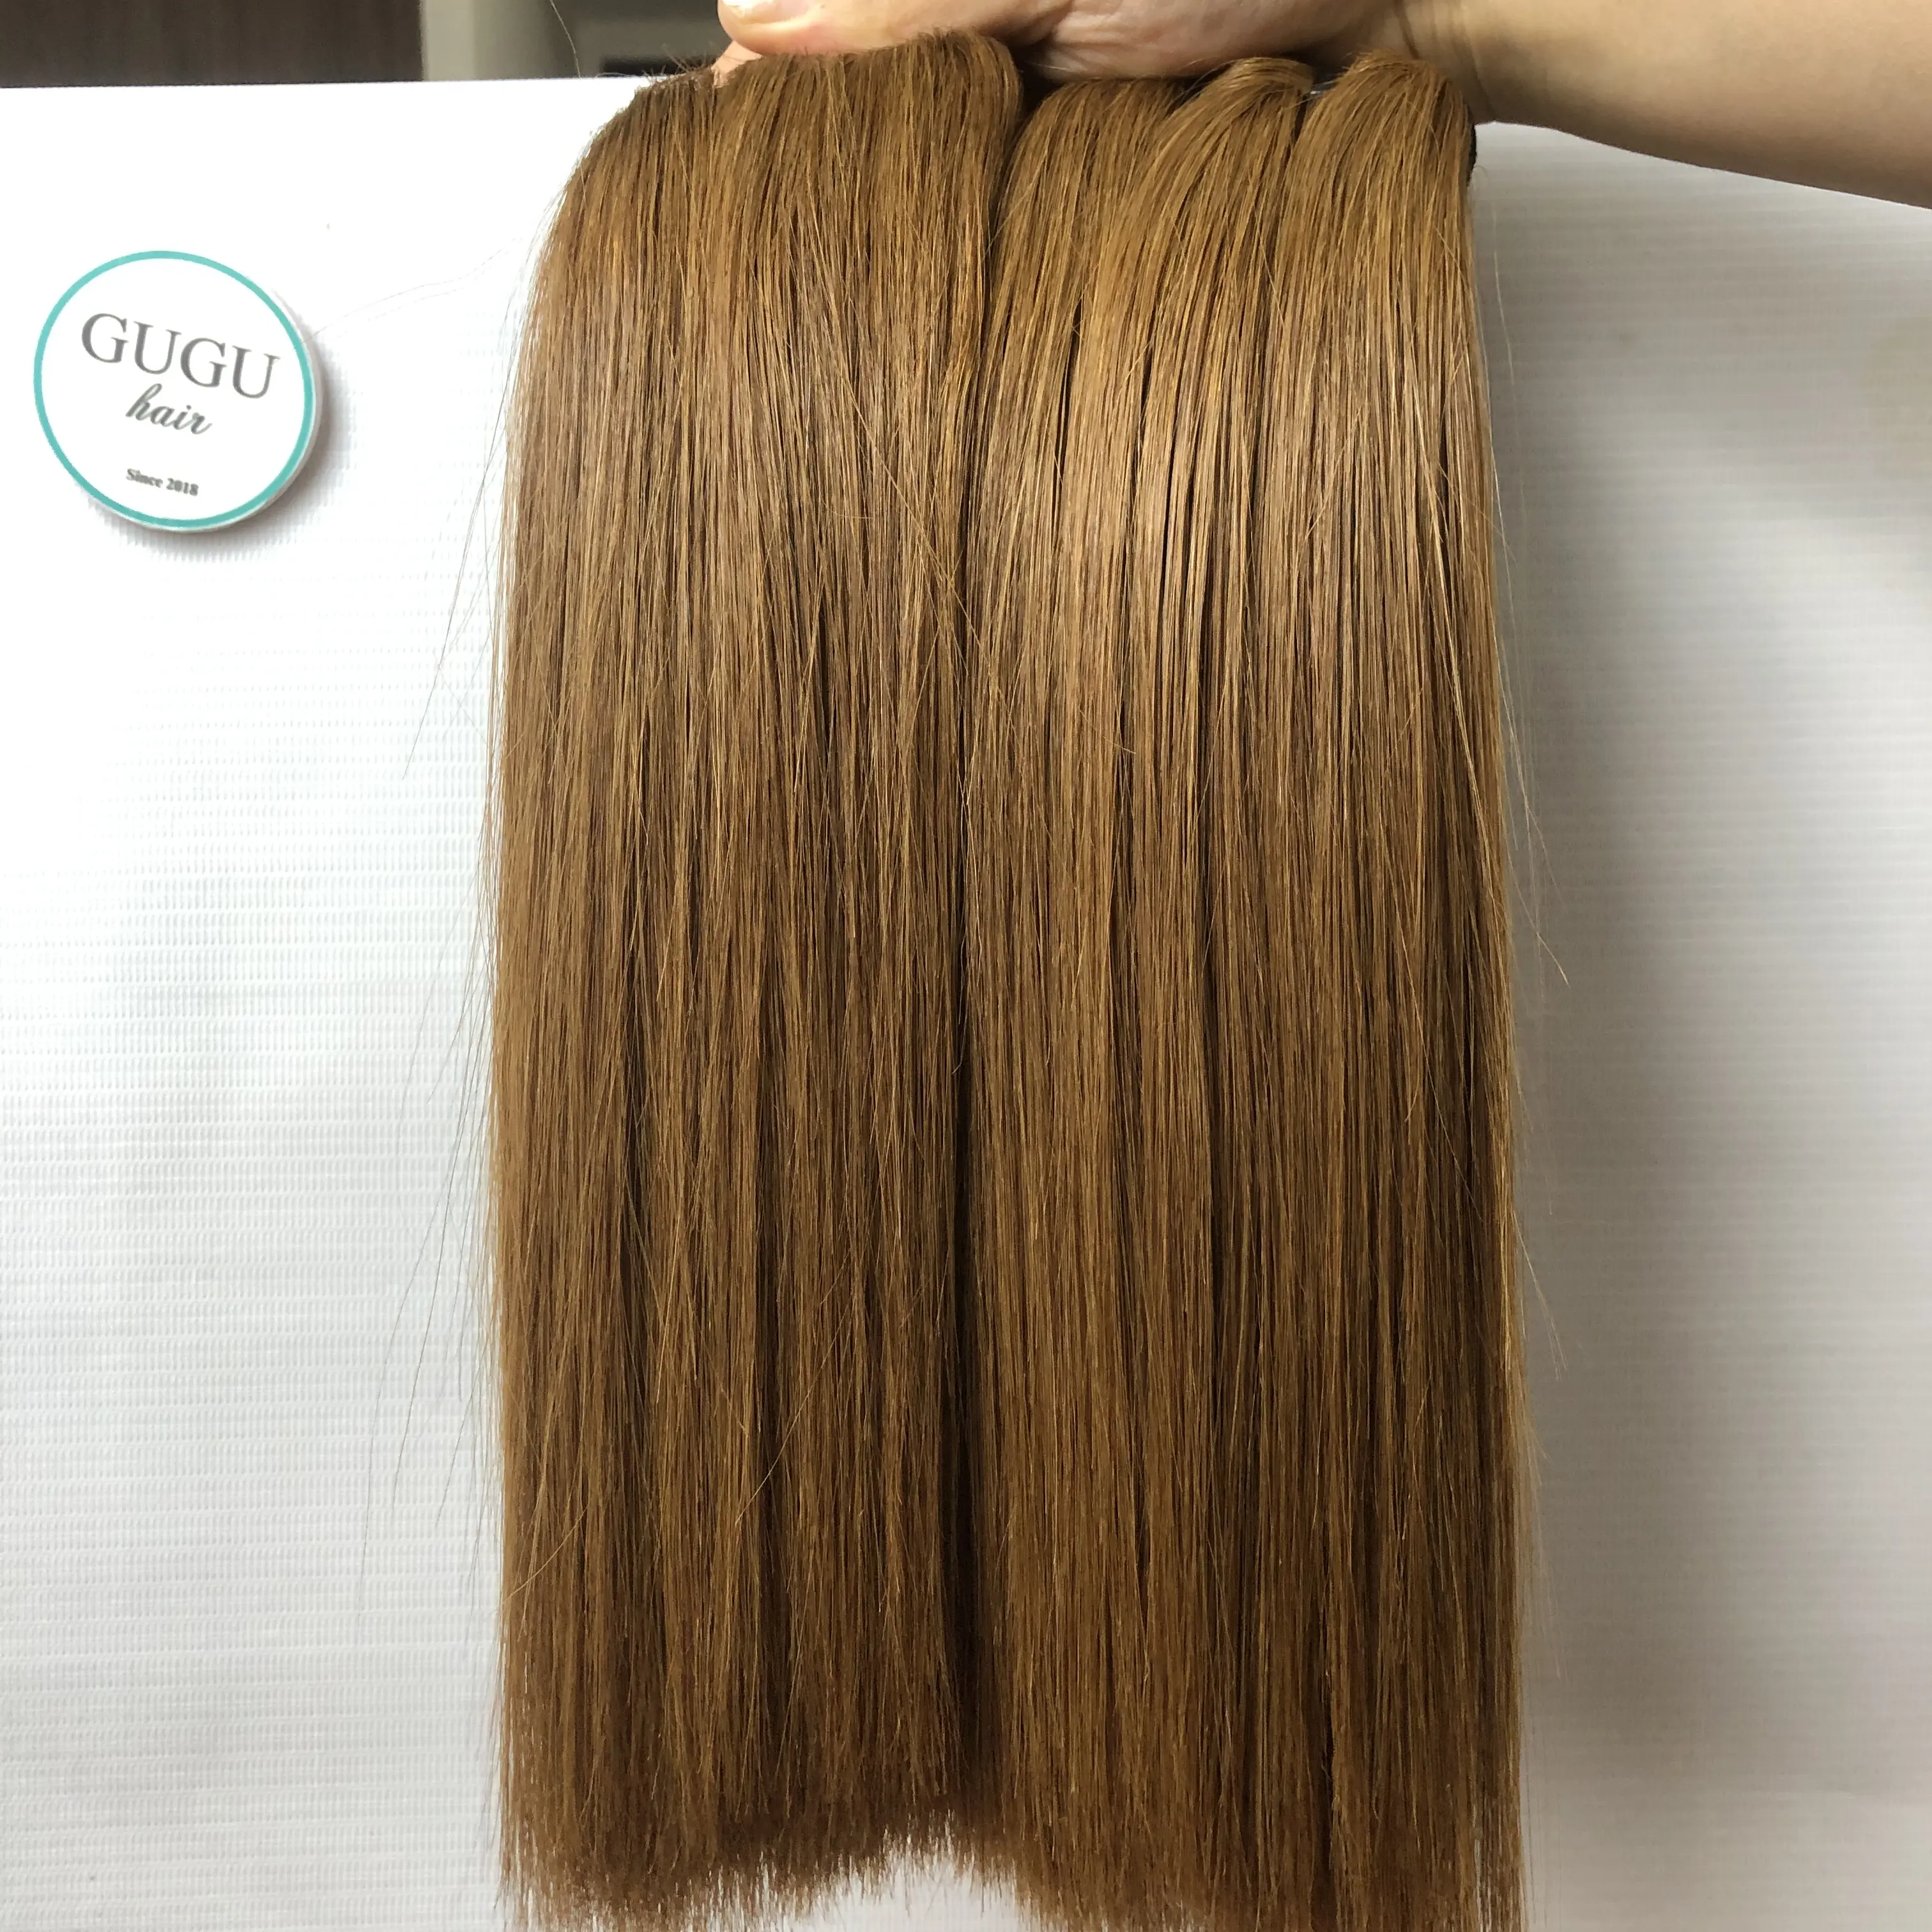 100% Vietnamese Human Hair Bundles Super Double drawn Bone straight Light brown color natural hair products for black women